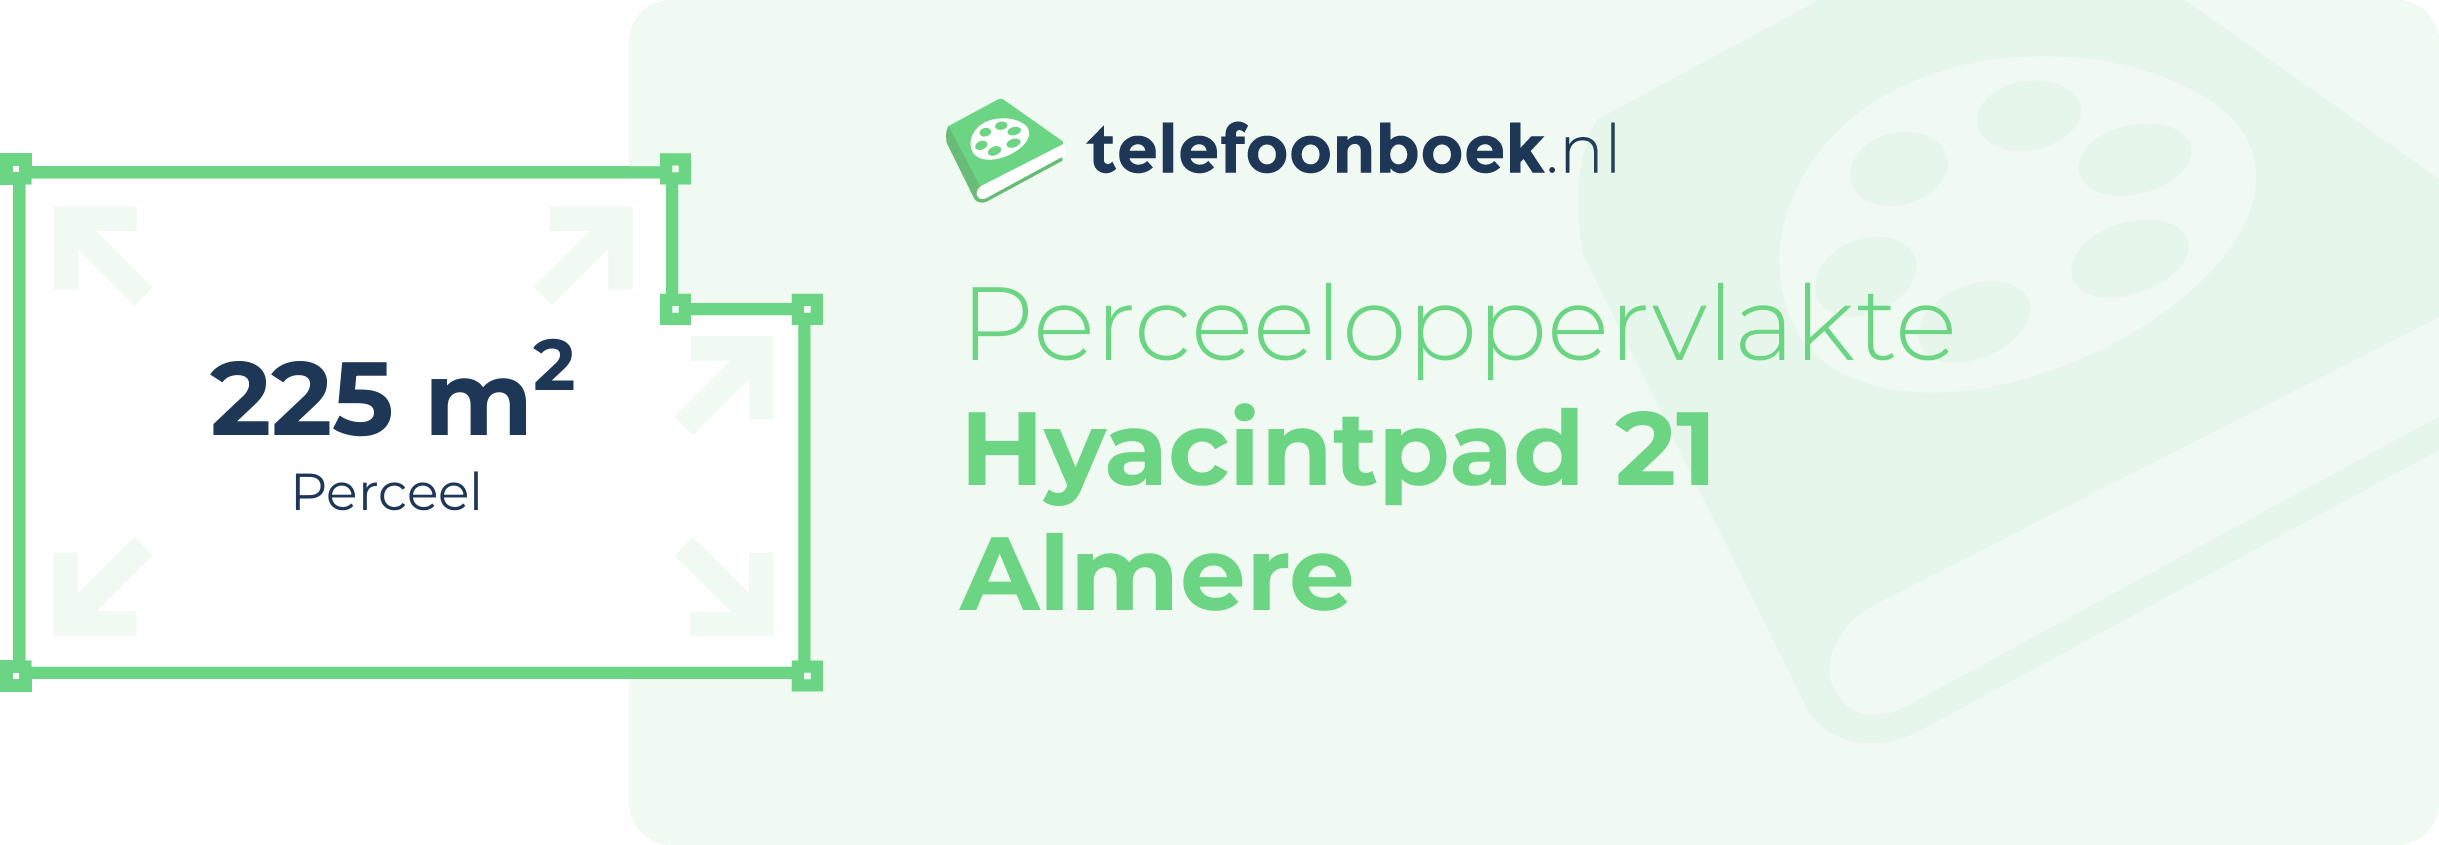 Perceeloppervlakte Hyacintpad 21 Almere